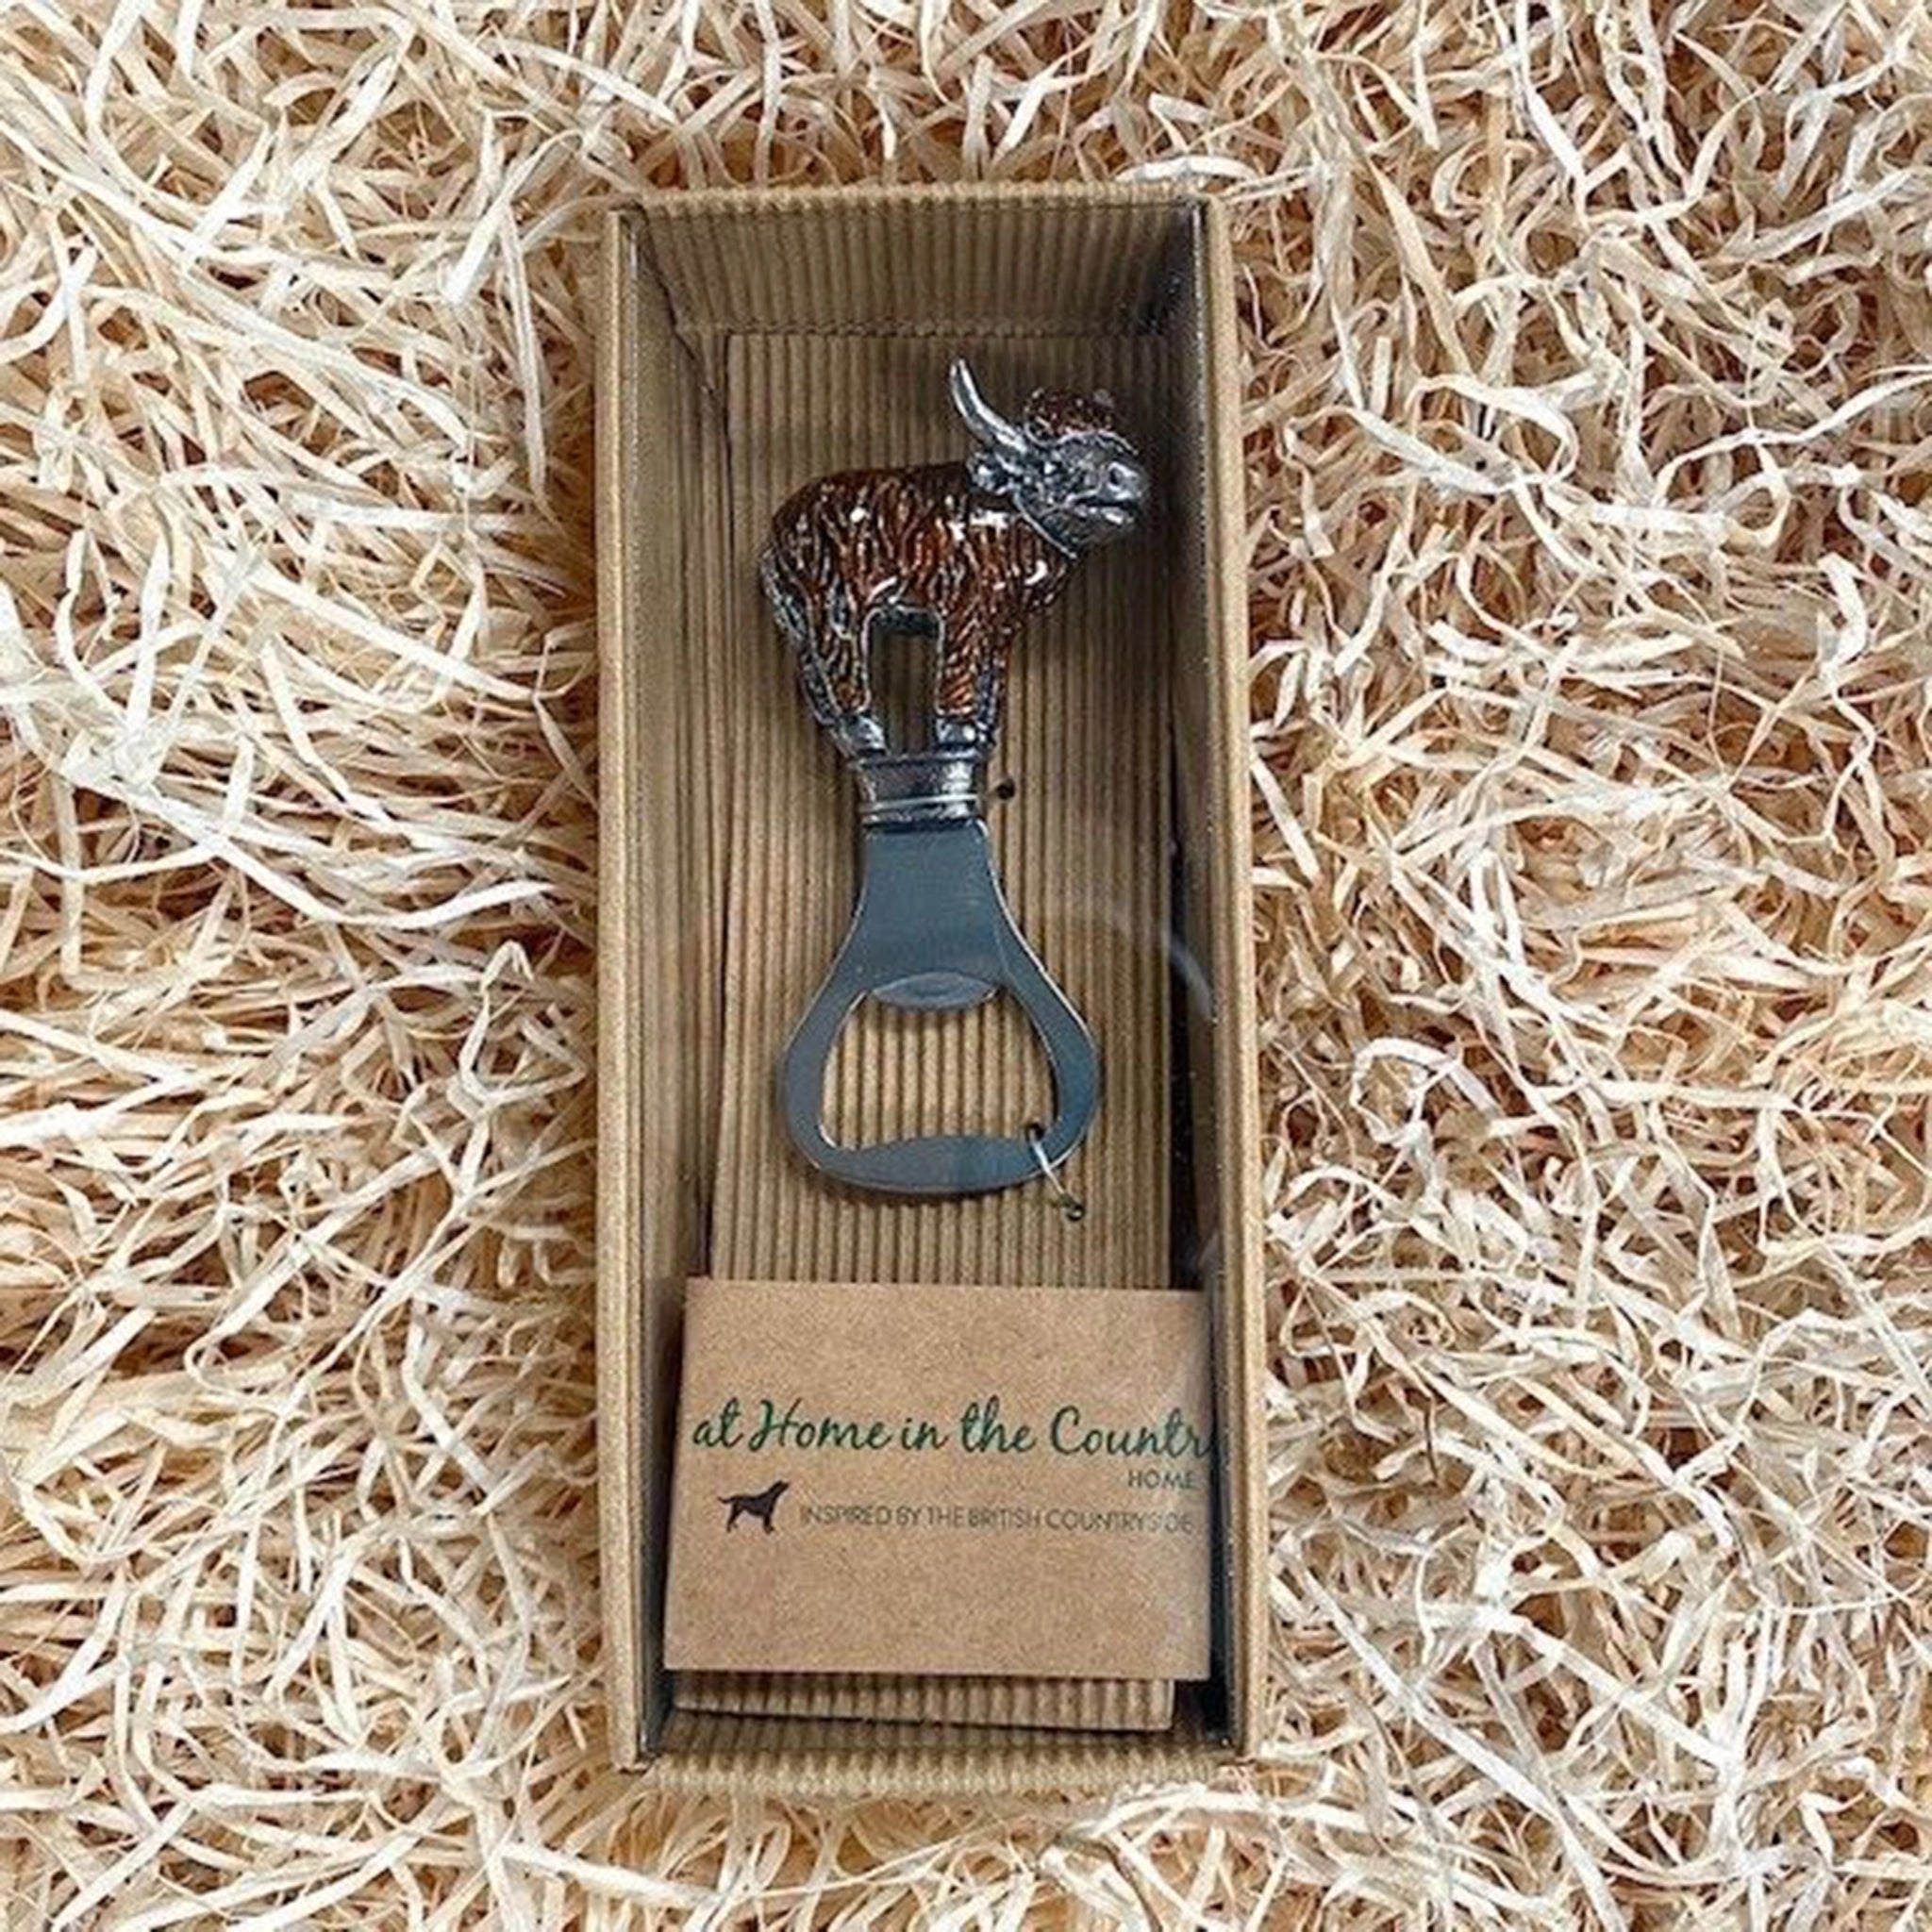 An enamelled Highland cow bottle opener in box